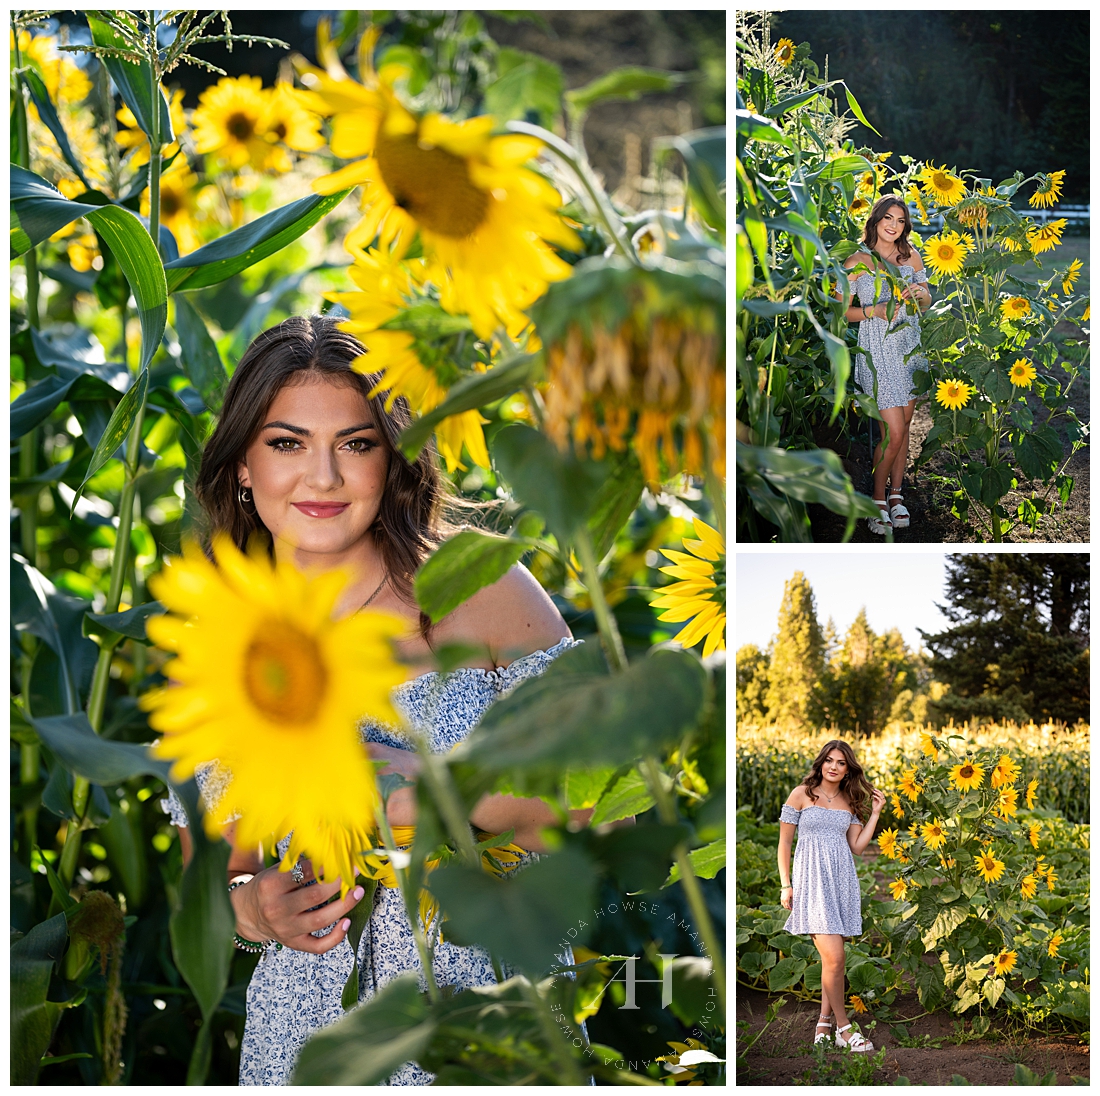 PNW Sunflower Senior Photos in Giant Sunflower Field | Amanda Howse Photography